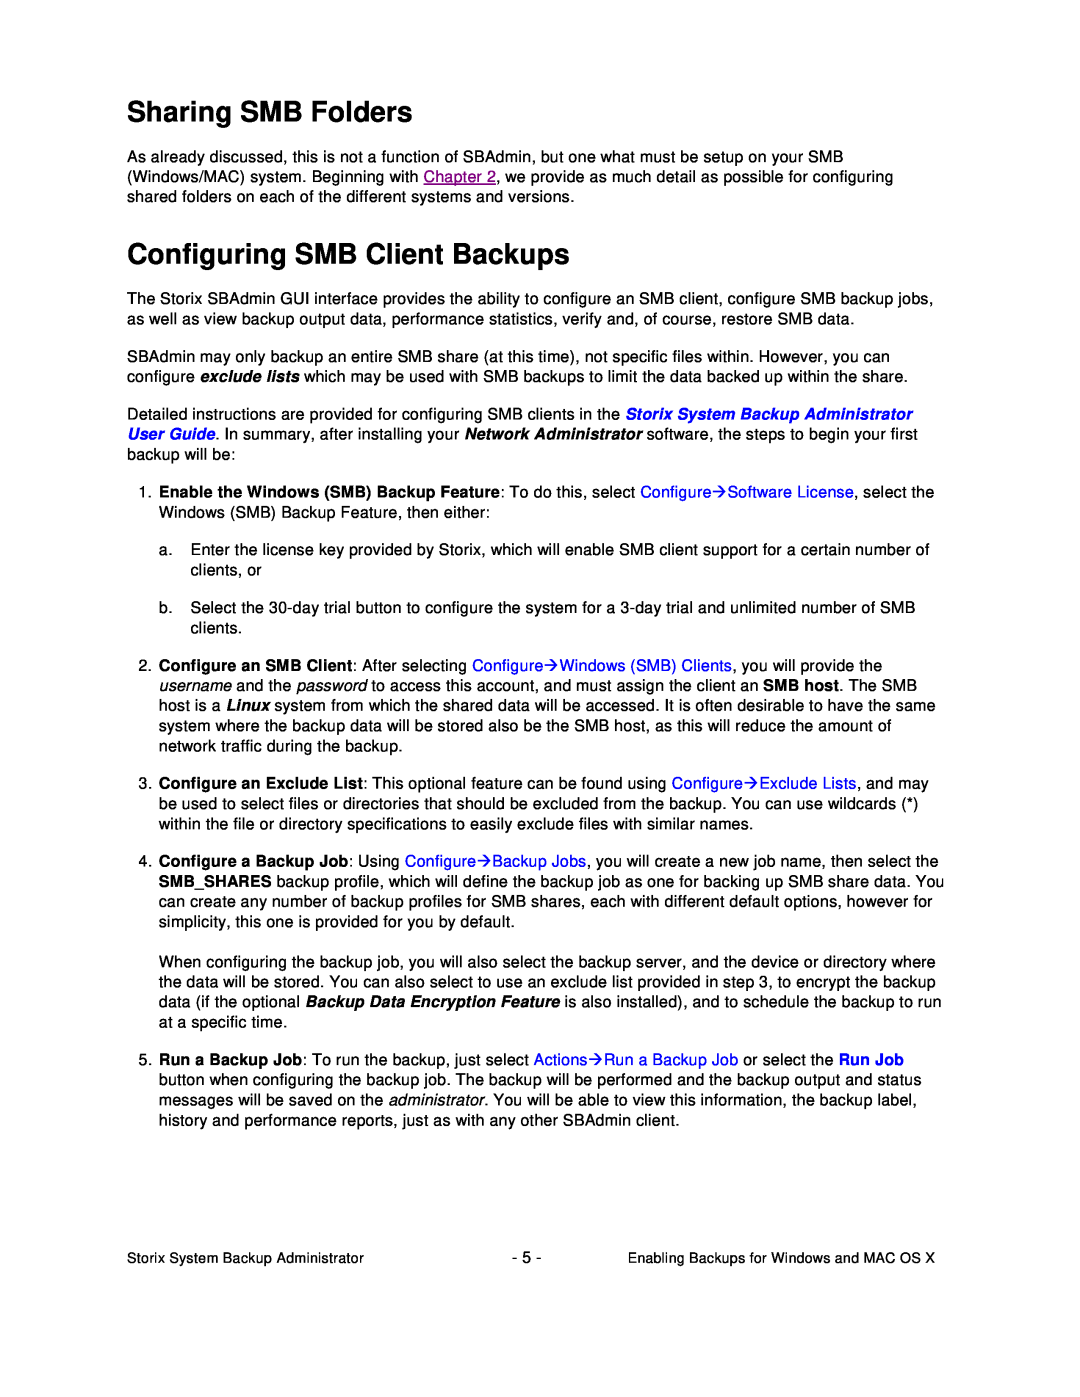 Apple ipod manual Sharing SMB Folders, Configuring SMB Client Backups 